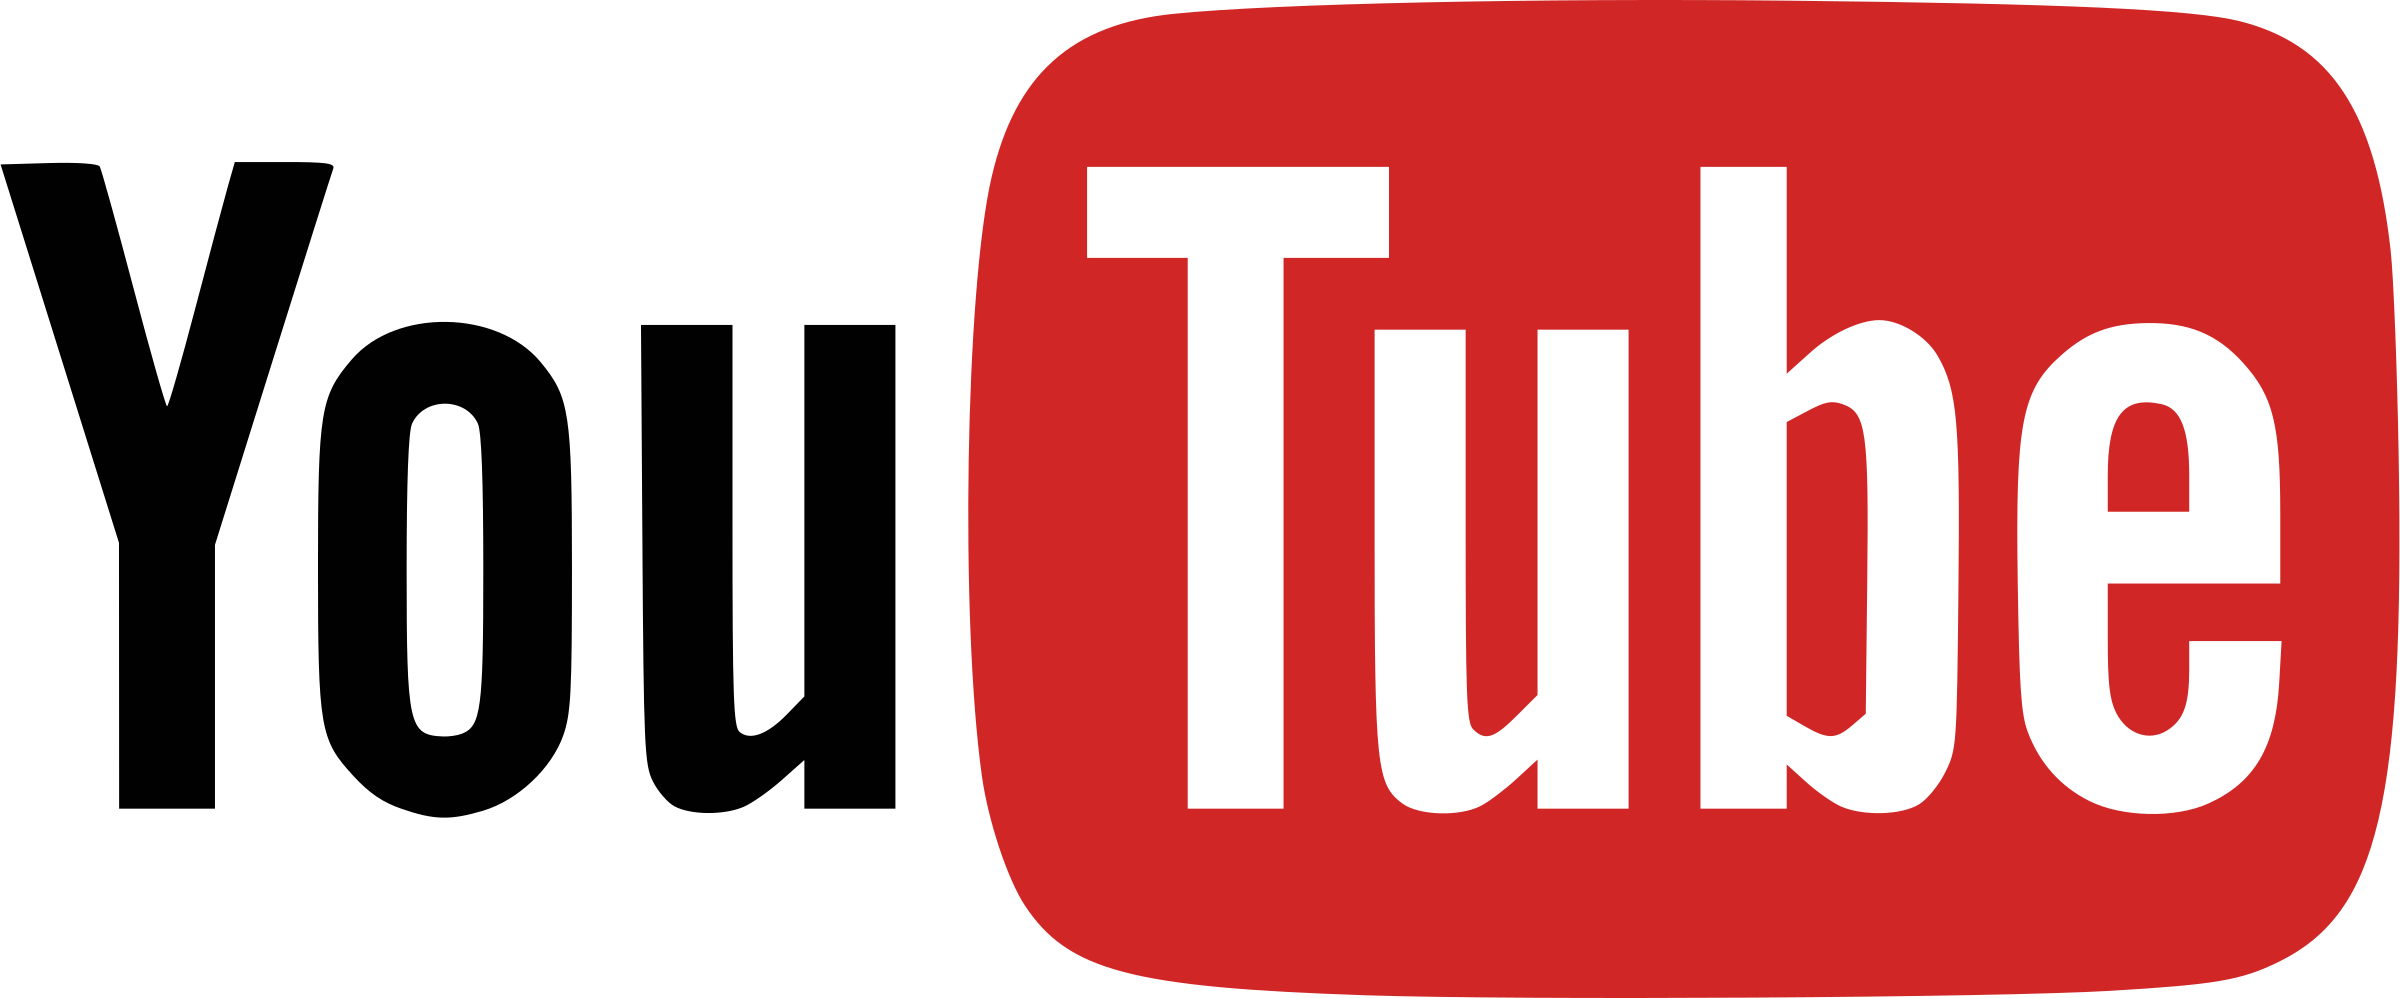 youtube 2 logo png transparent